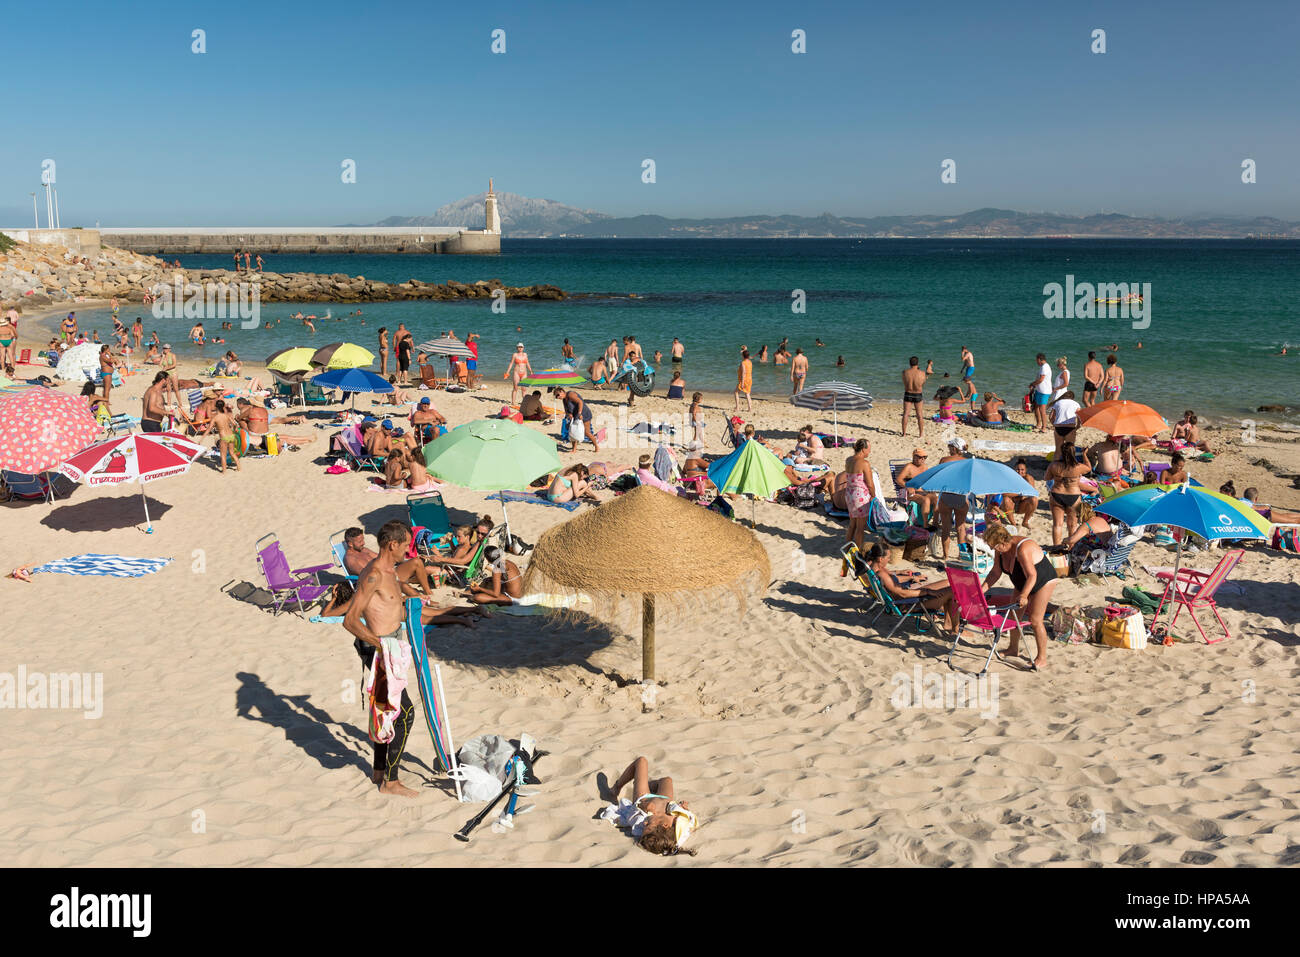 Playa Chica, Tarifa, Costa de la Luz, Cadiz, Andalusia, Spain. Stock Photo